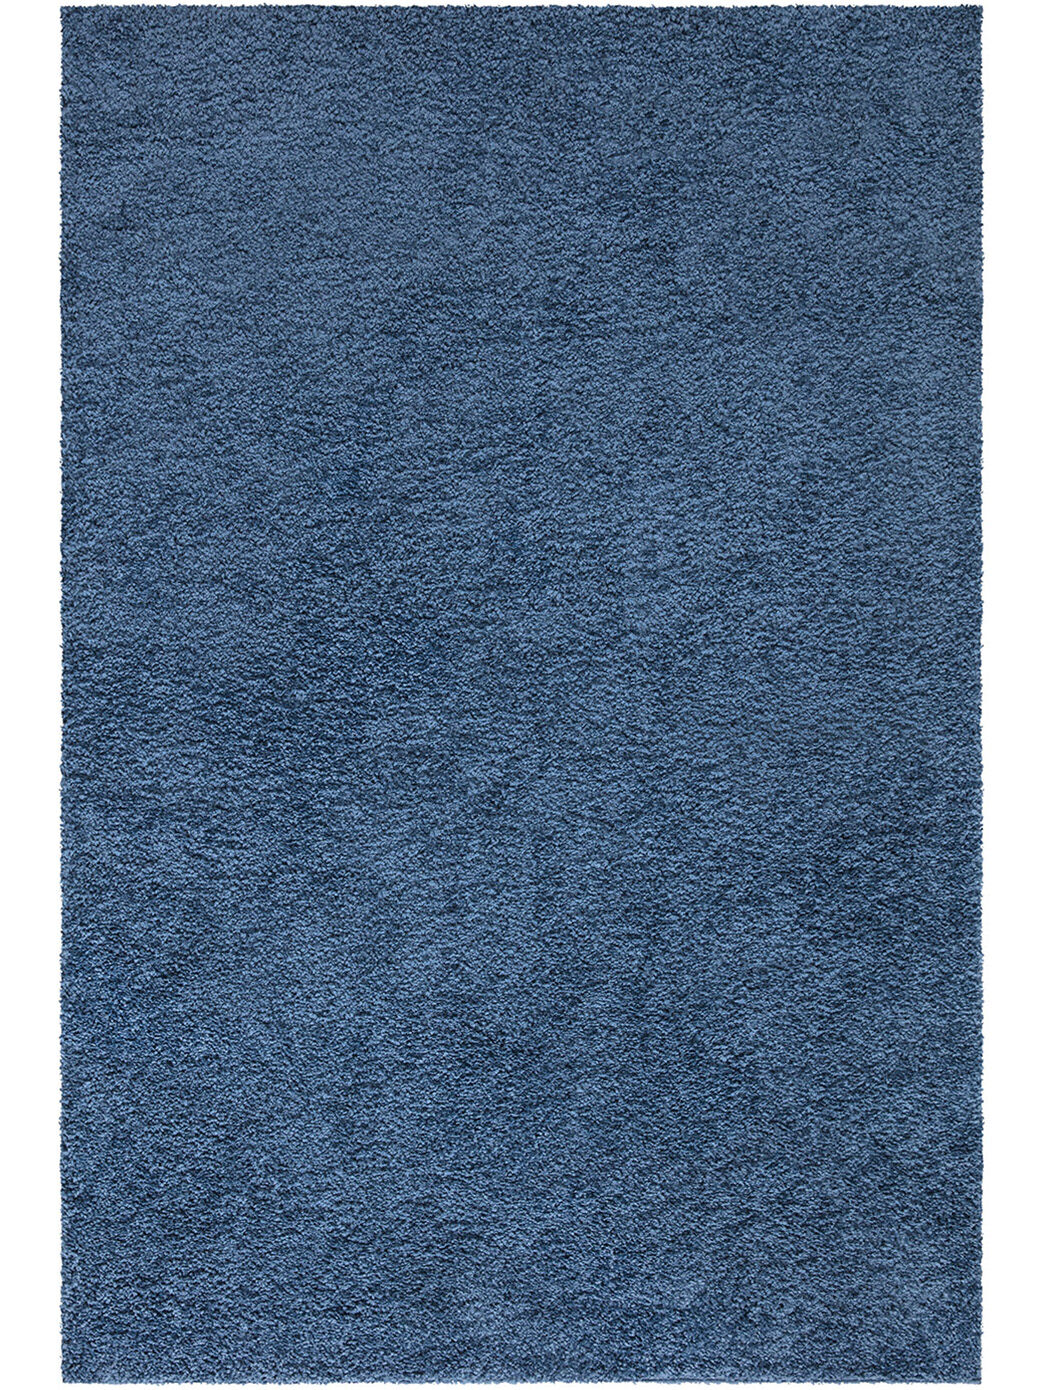 Hochflor Teppich Blau 160x230 1